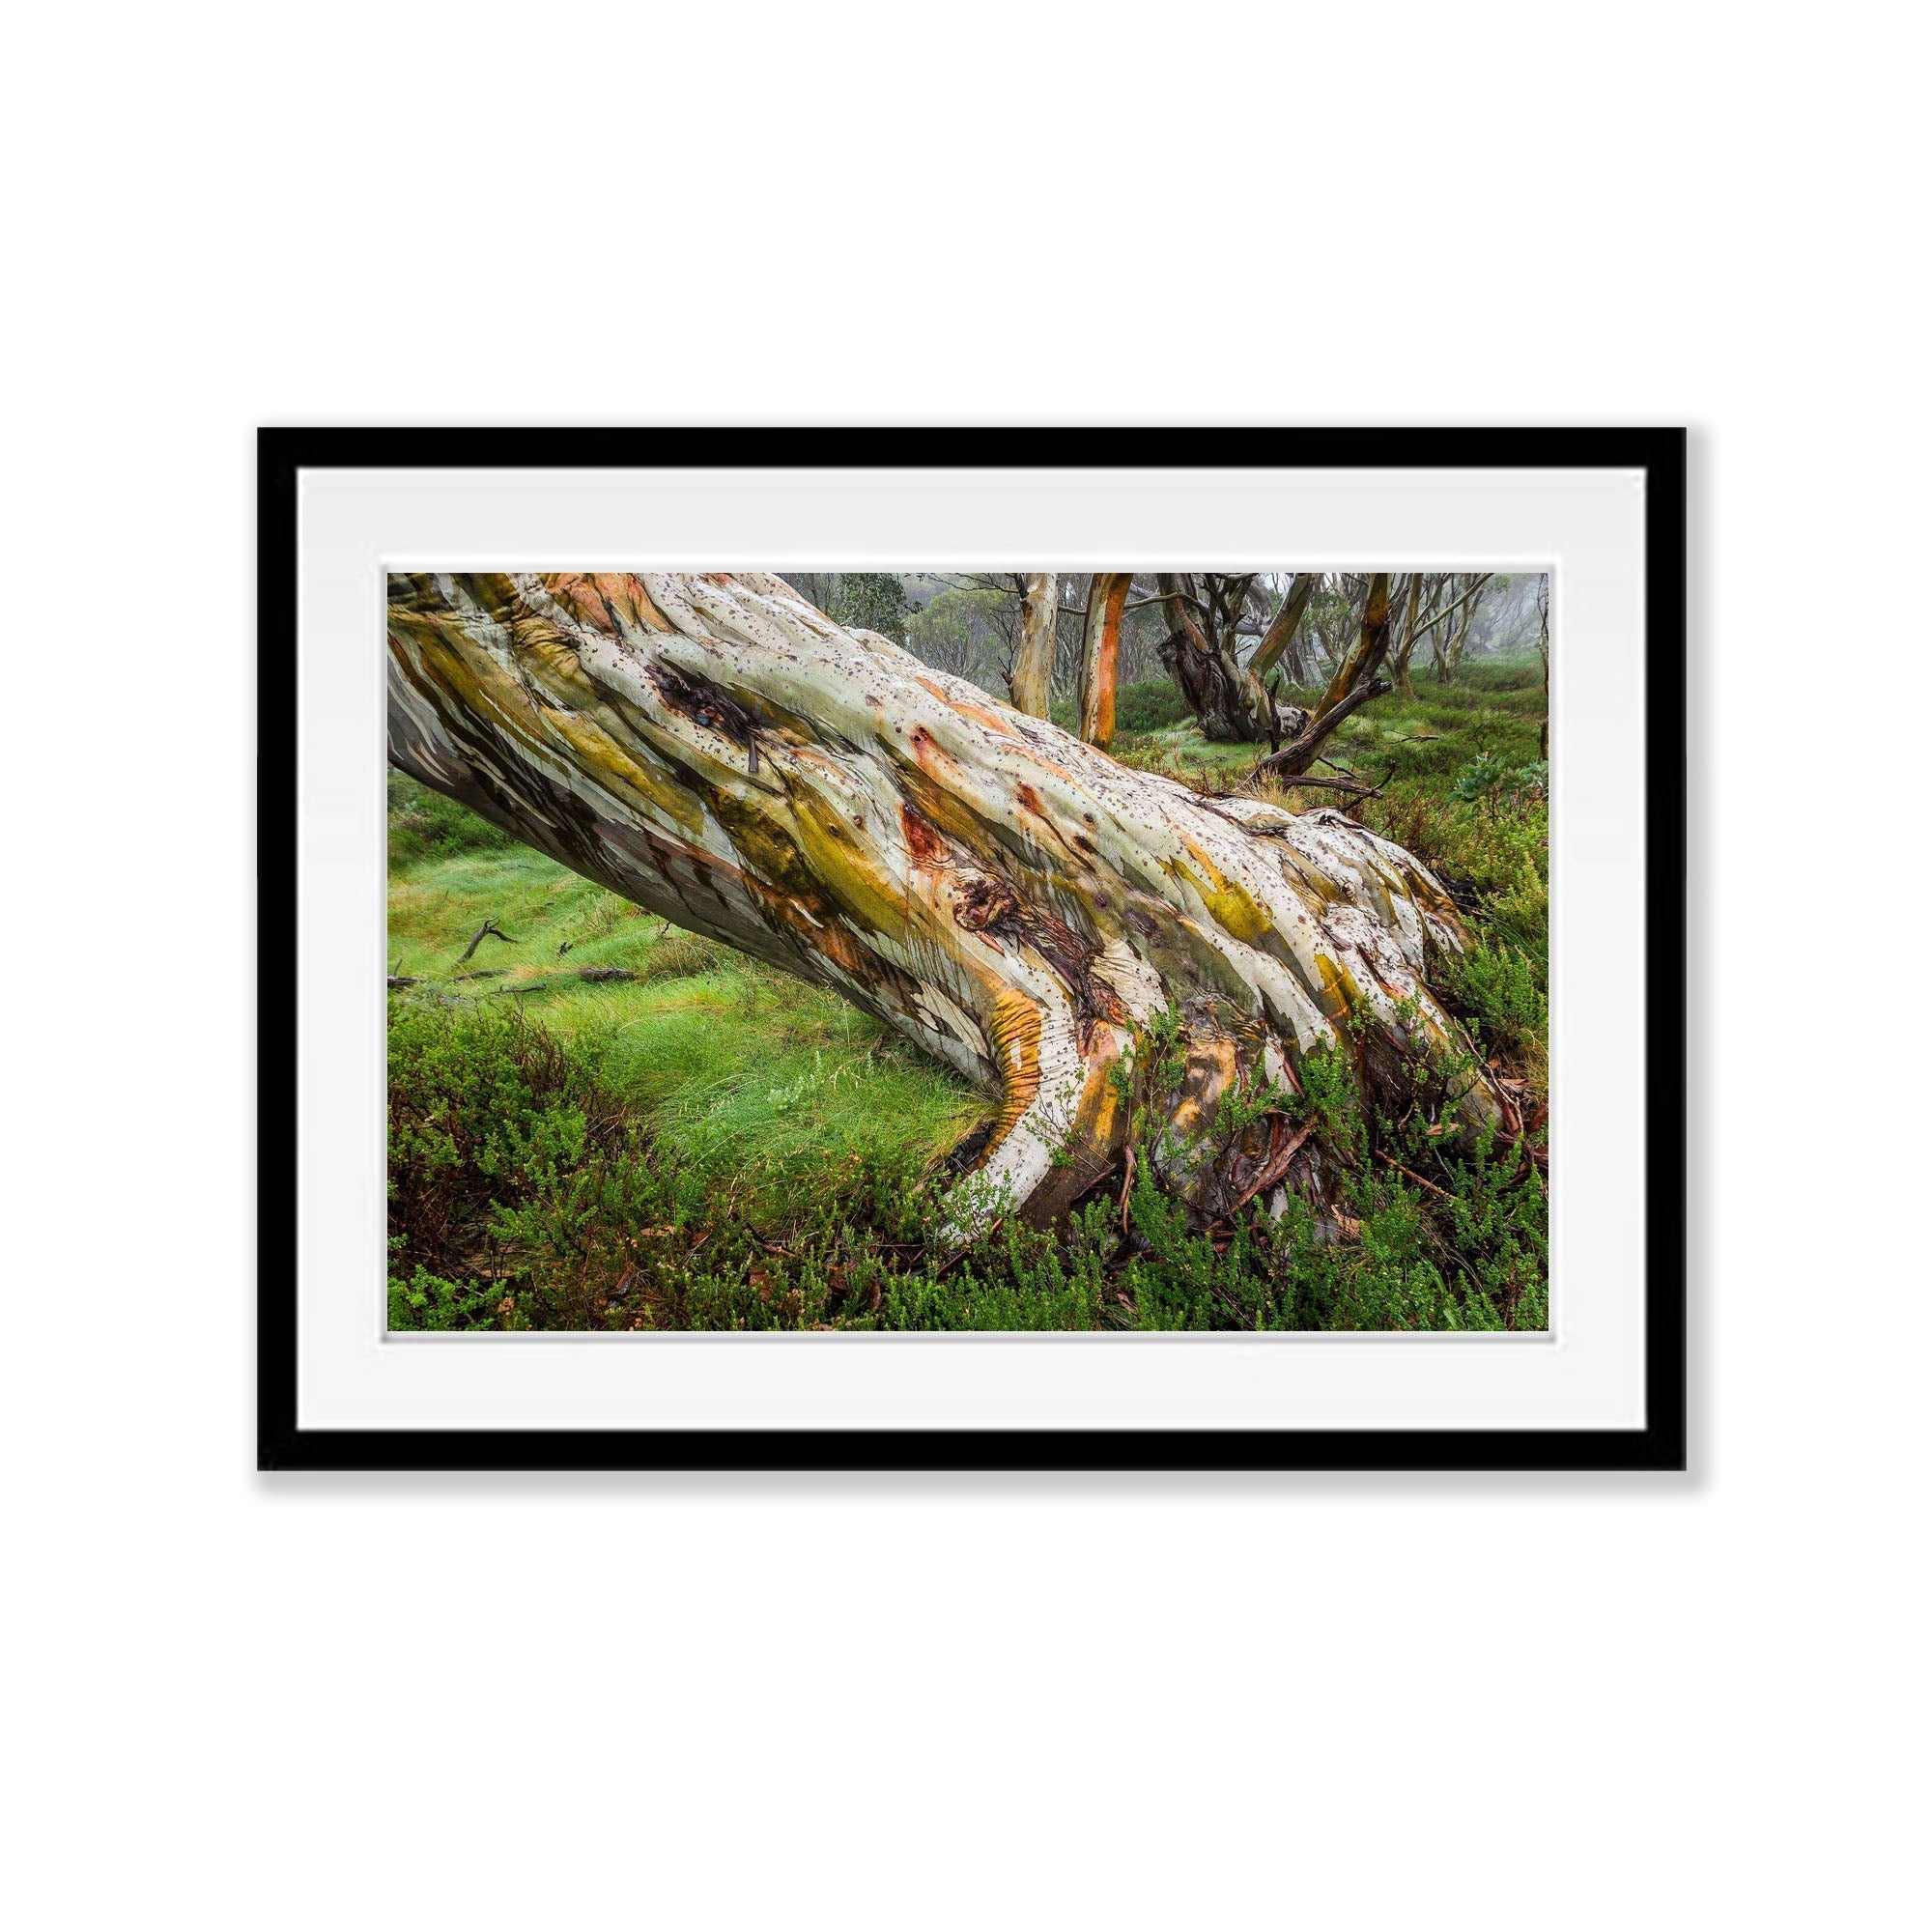 ARTWORK INSTOCK - Ancient Snow Gum - Snowy Mountains, NSW - 150 x 100cms Canvas Raw Oak Print